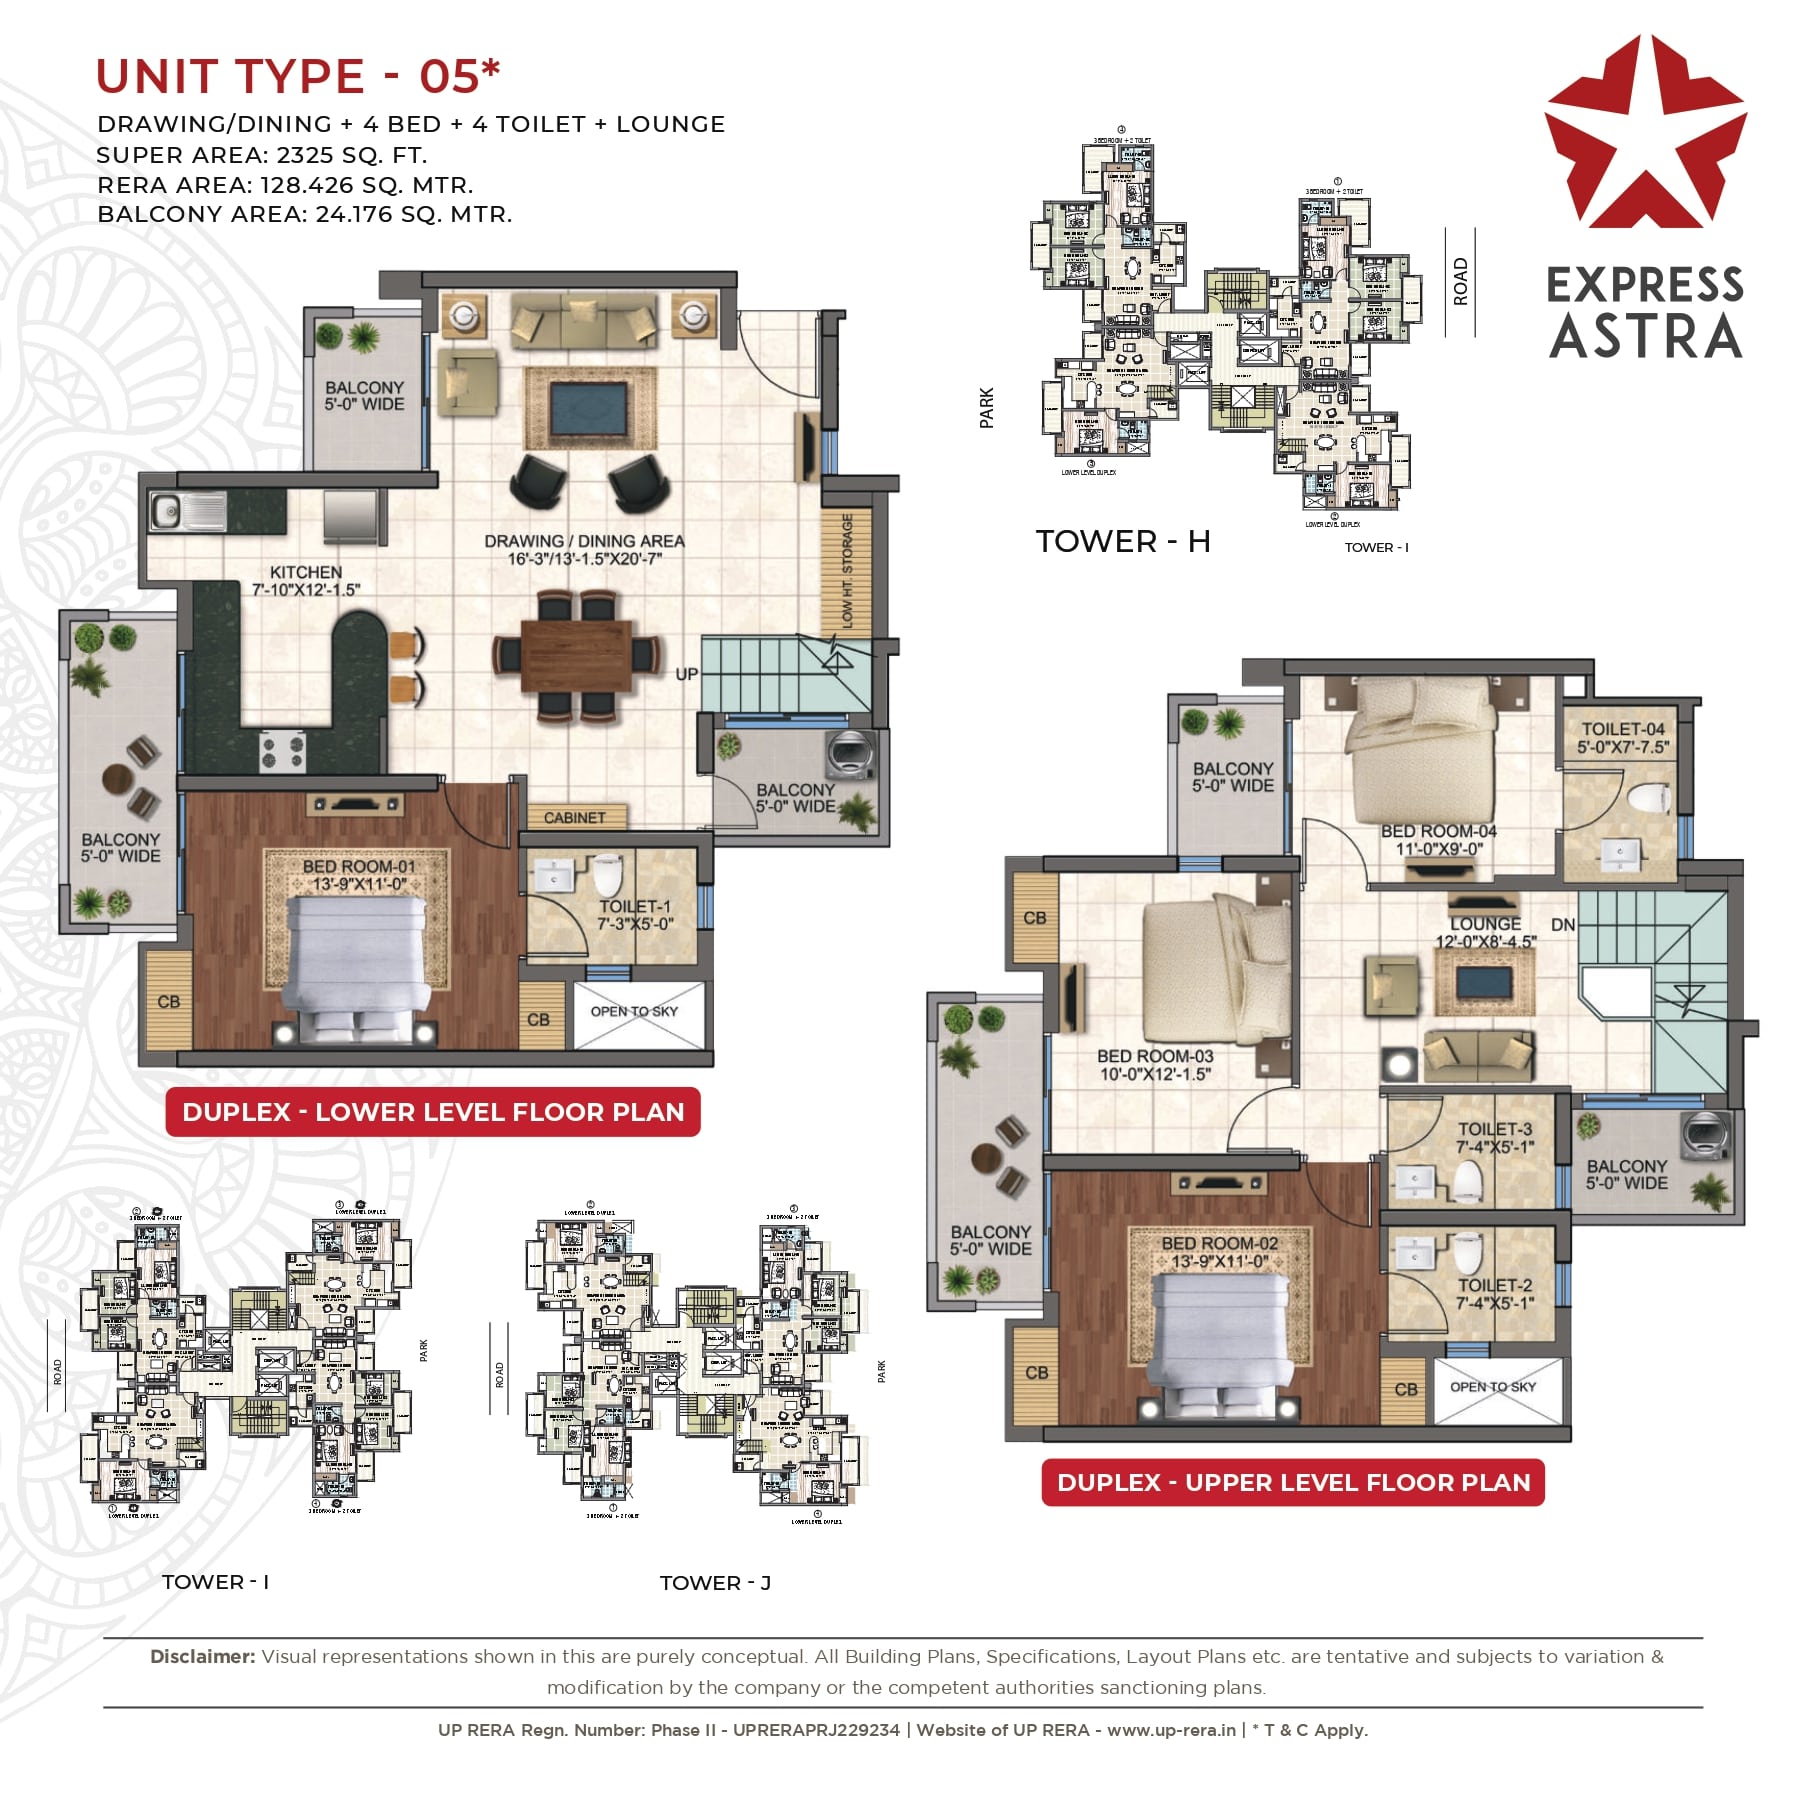 Express Astra Duplex Floor Plan